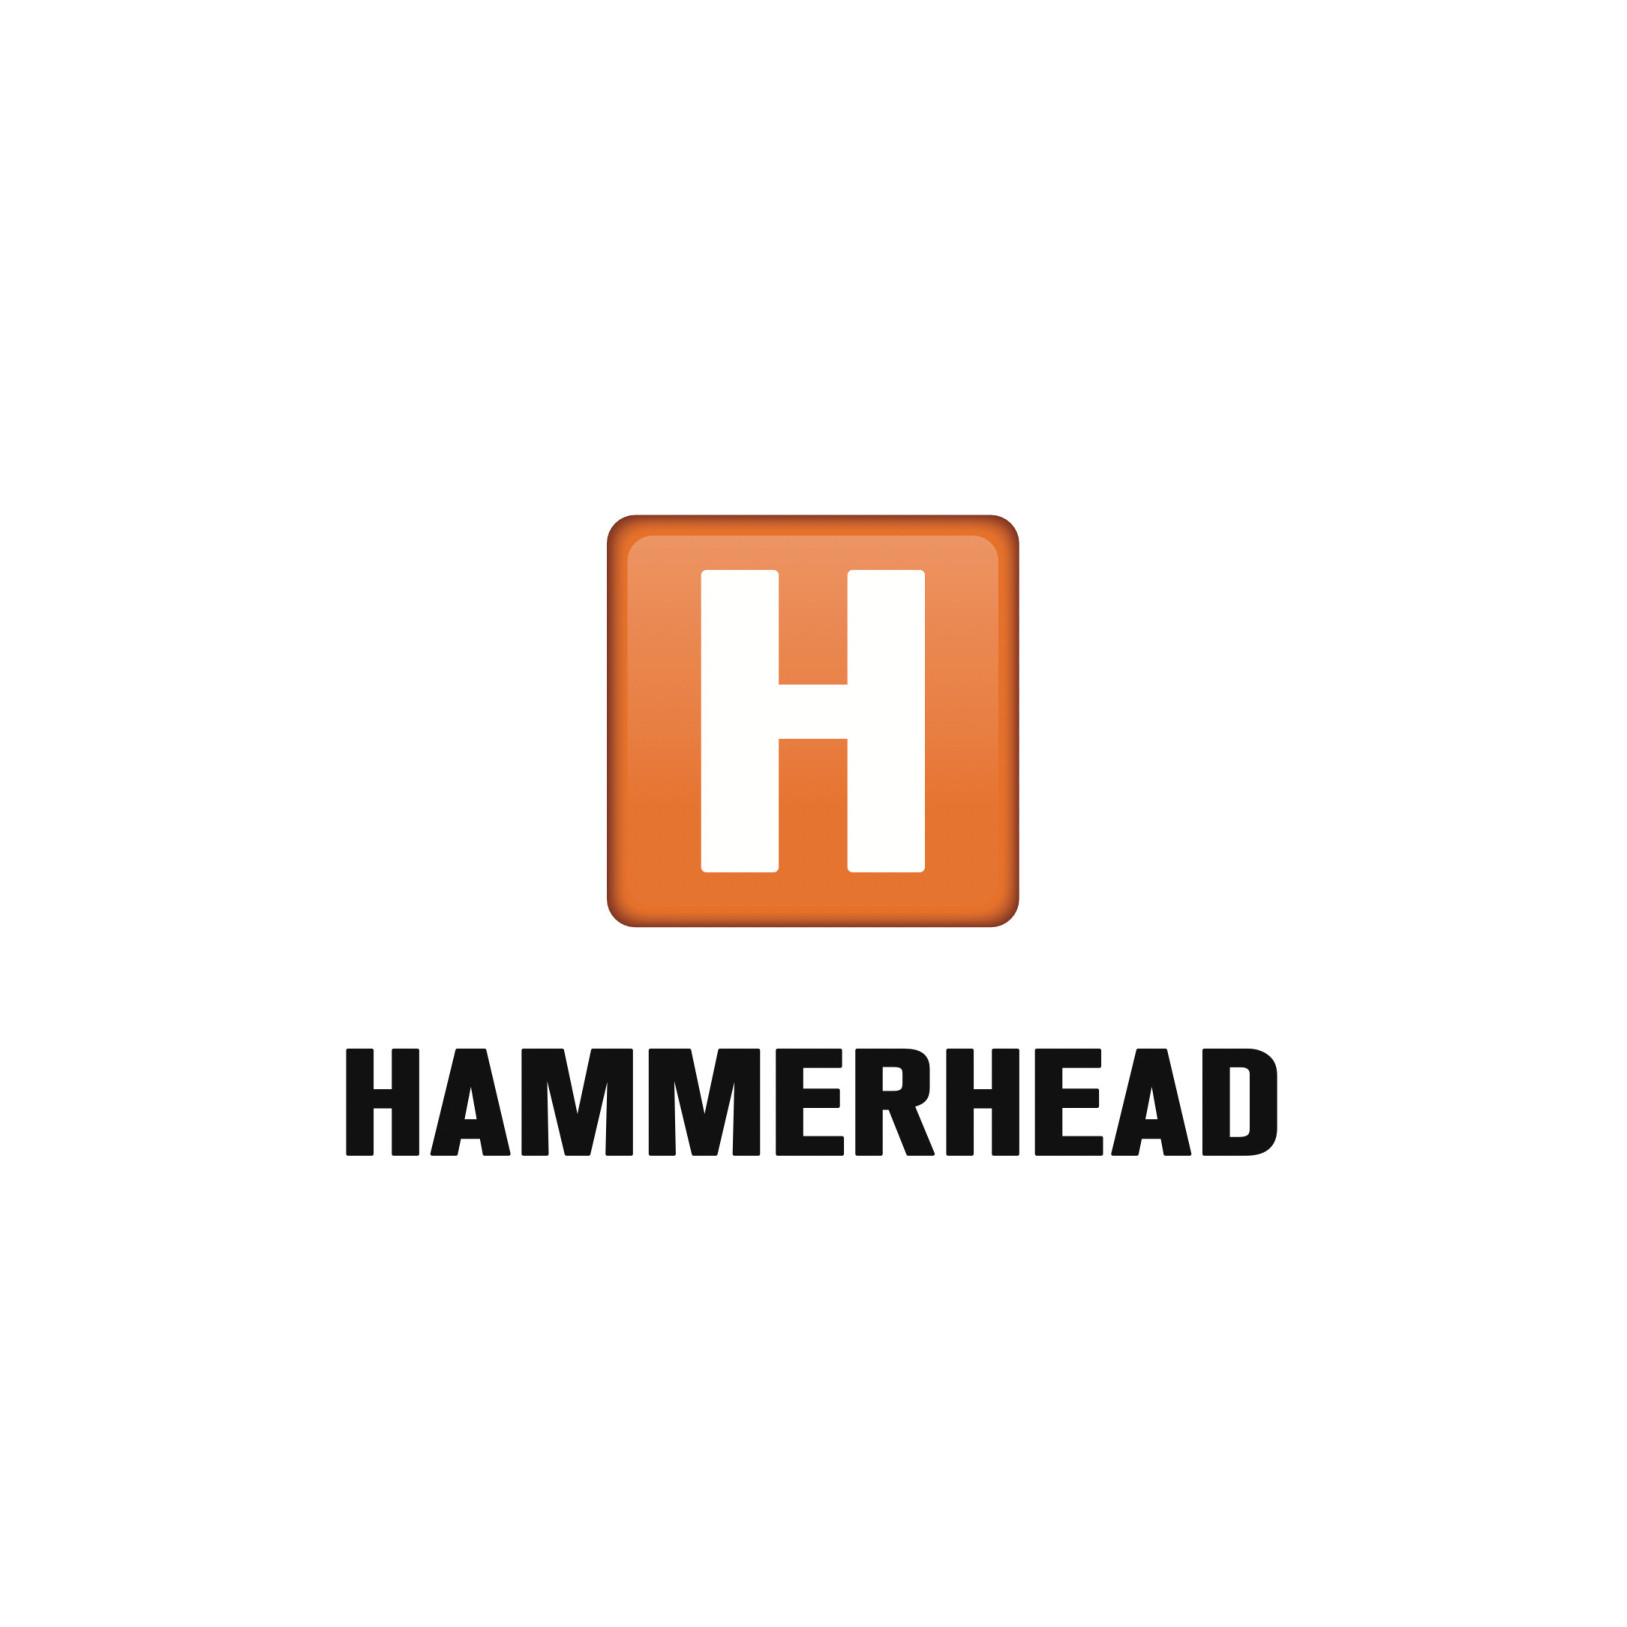 K3 HAMMERHEAD OÜ - Space to Succeed!